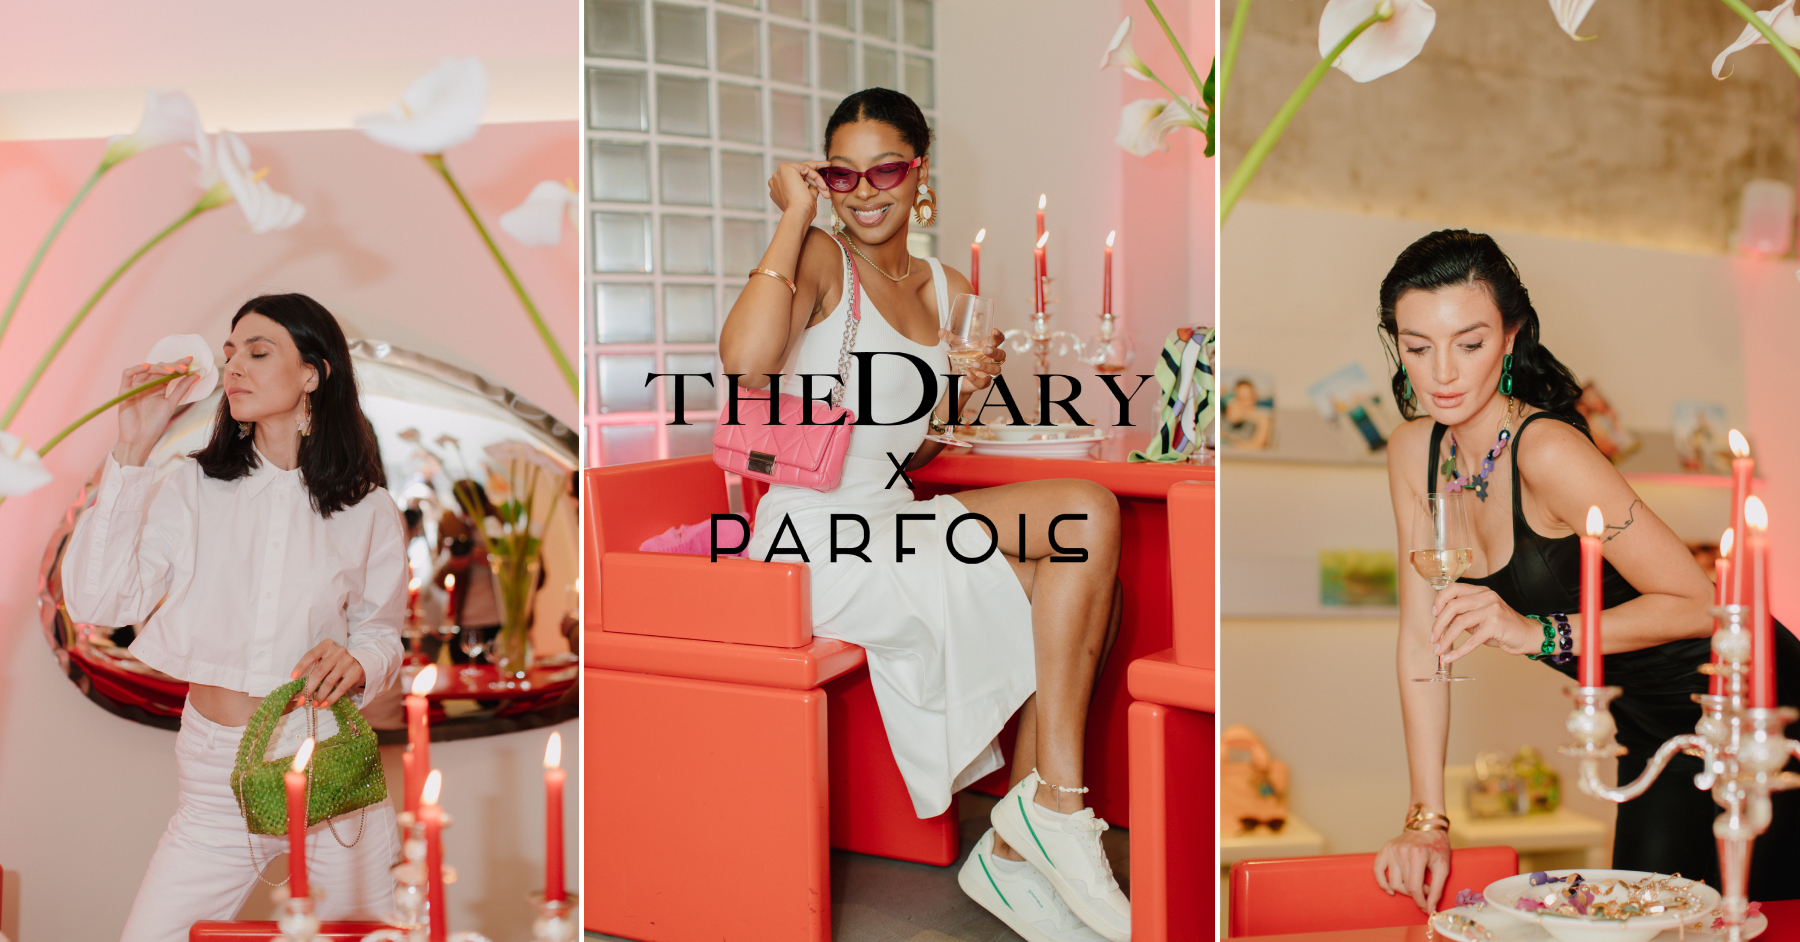 Cook the Look - PARFOIS-ის და The Diary-ის კონცეპტუალური ღონისძიება ინფლუენსერებისთვის